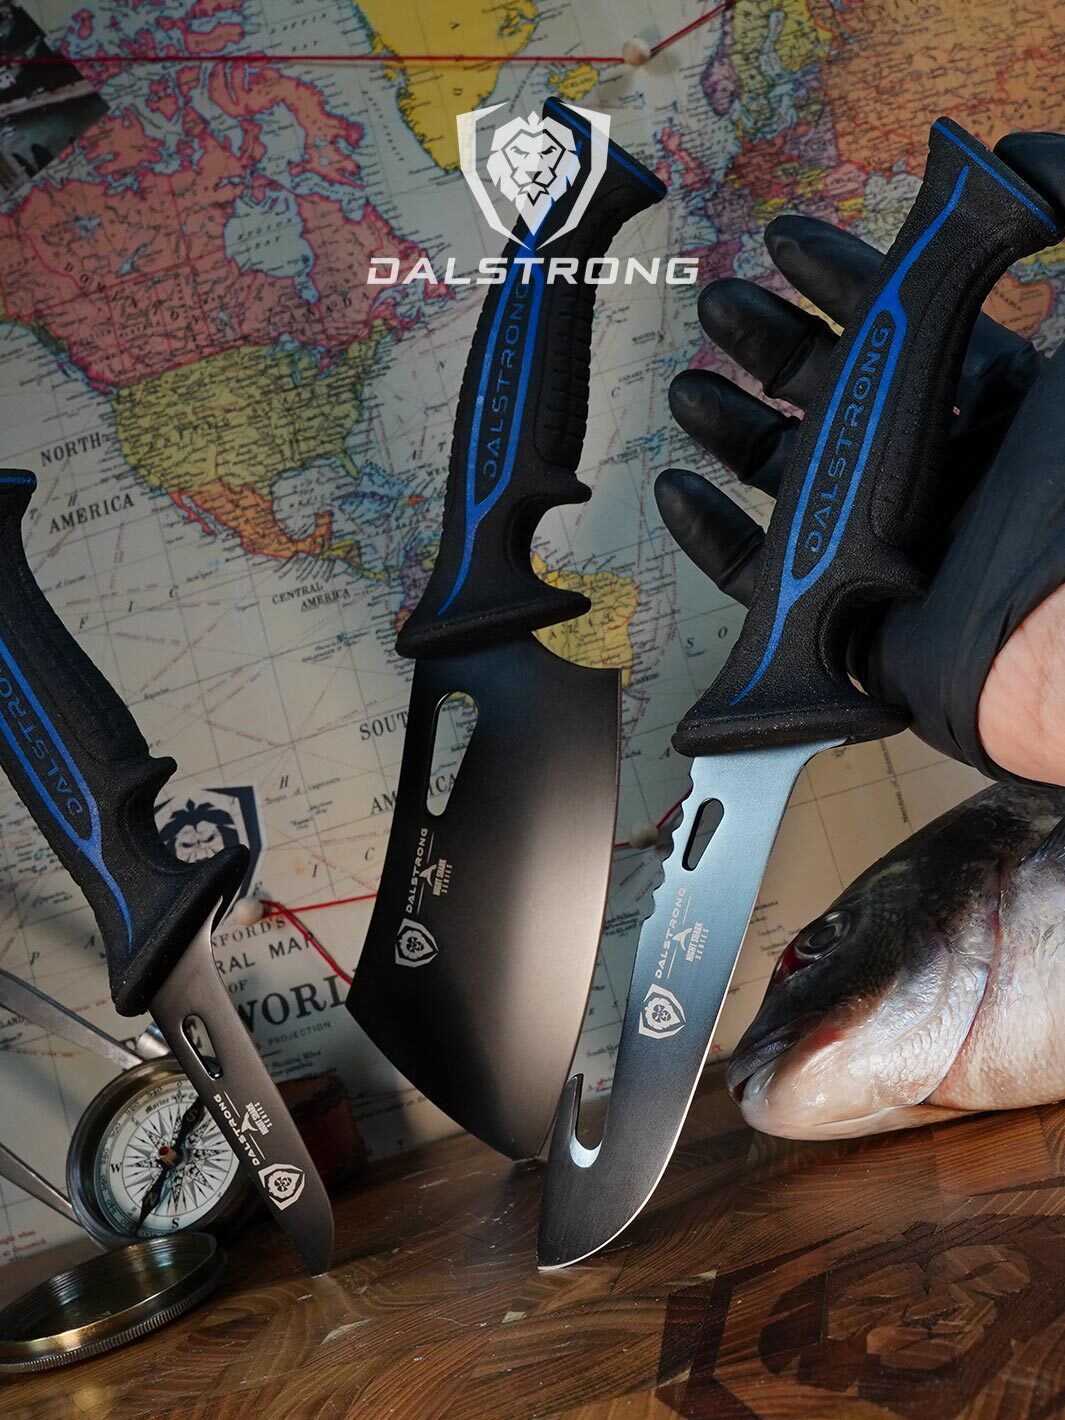 3-Piece Knife Set | Boning Knife, Hook Knife, Mini Cleaver | Night Shark Series | NSF Certified | Dalstrong